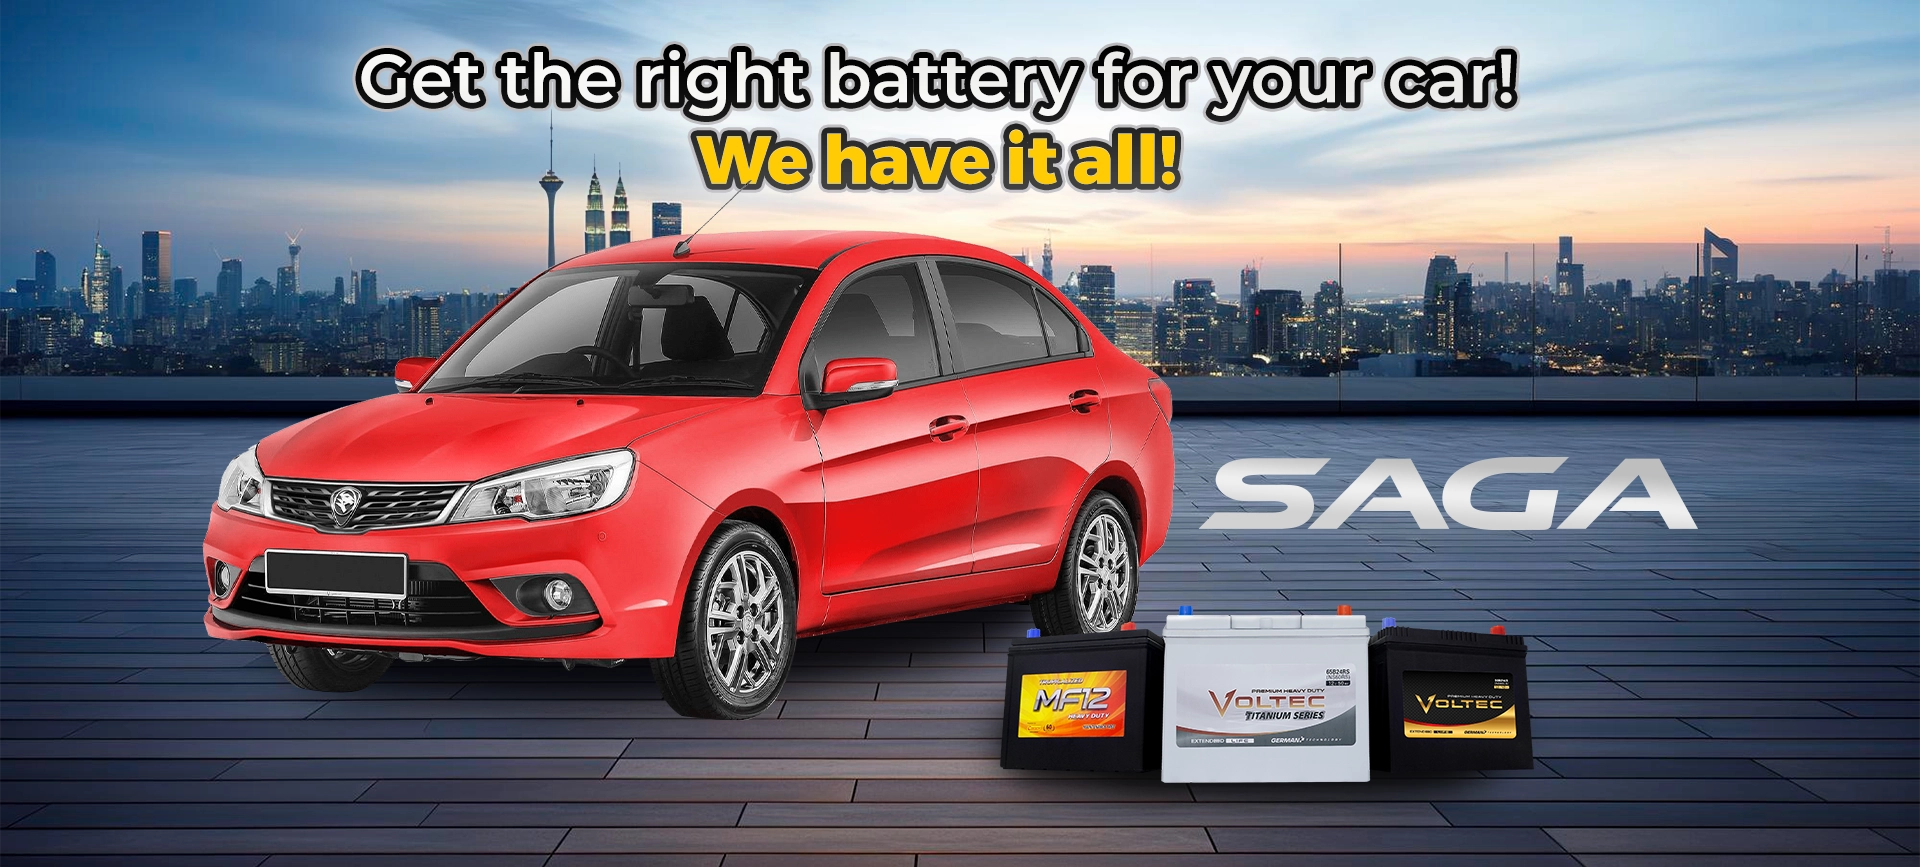 Best Proton Saga Car Battery Price